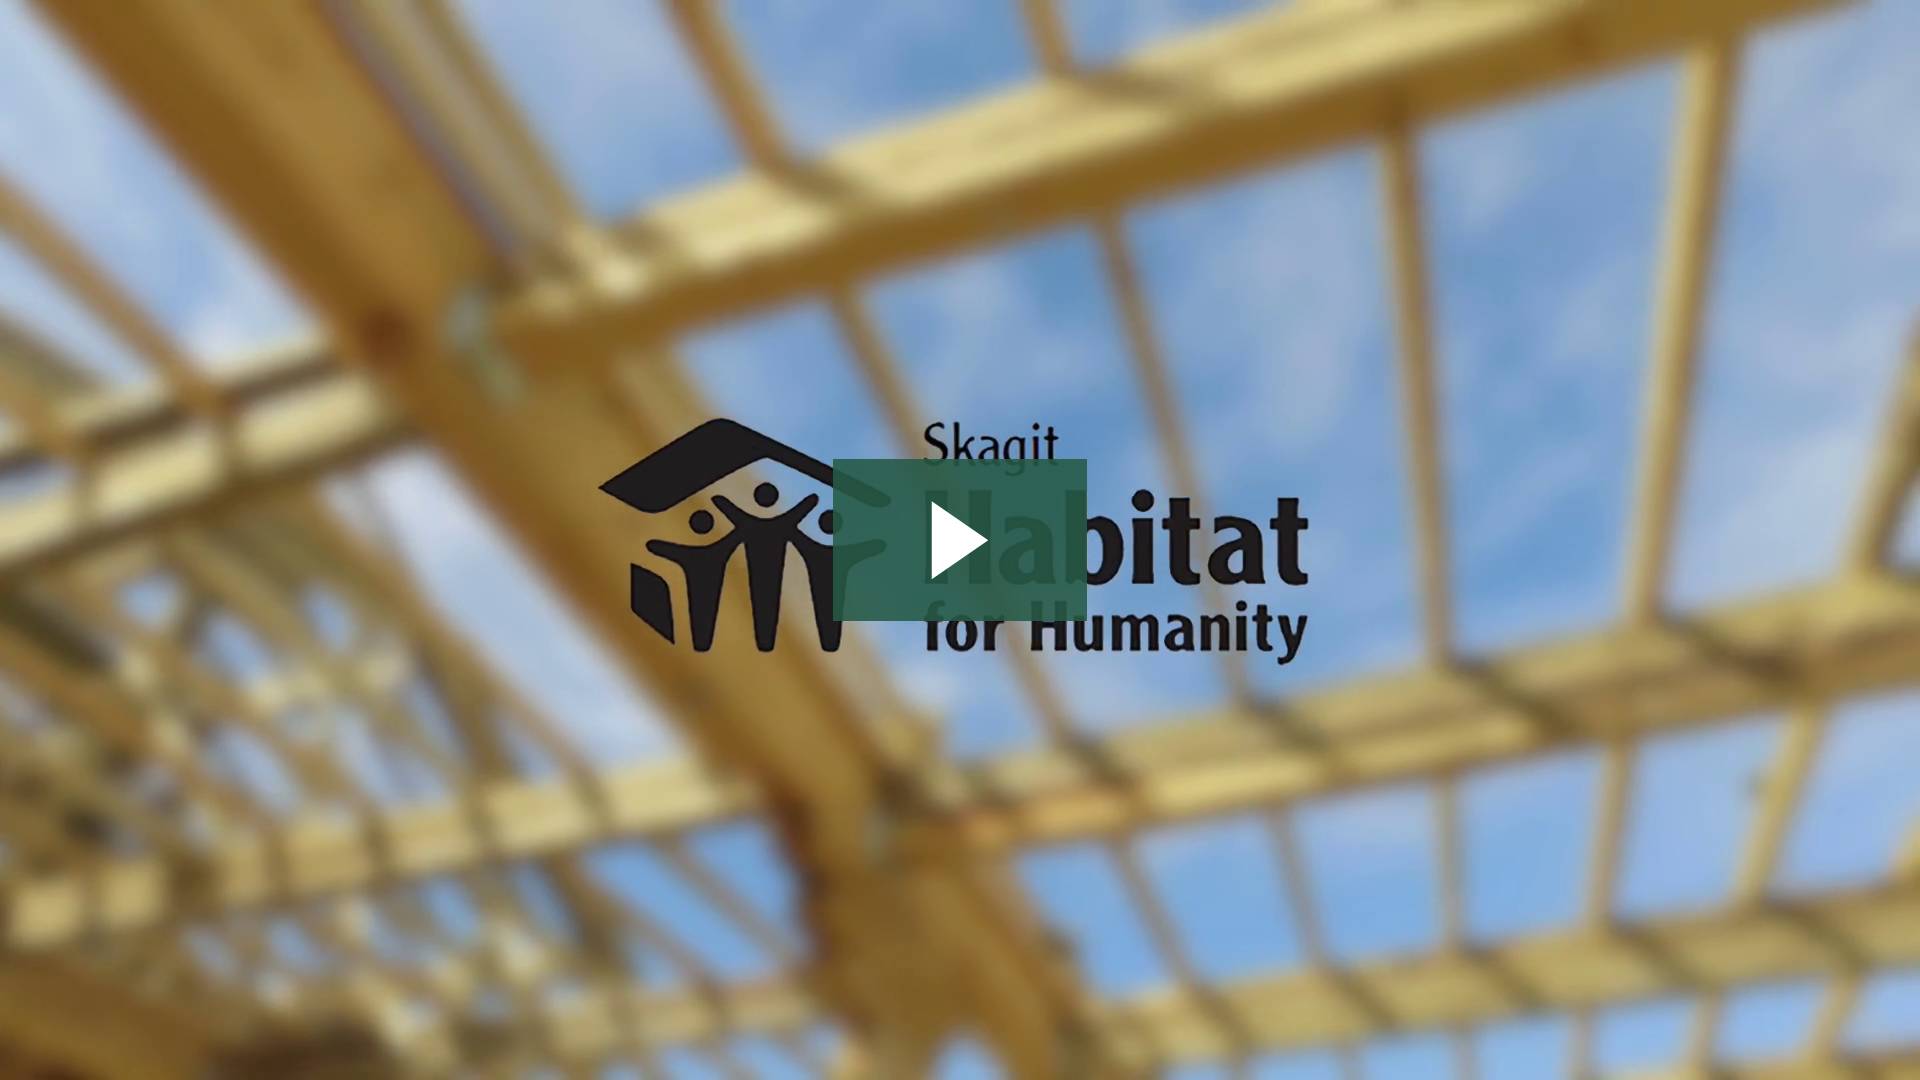 Skagit Habitat for Humanity